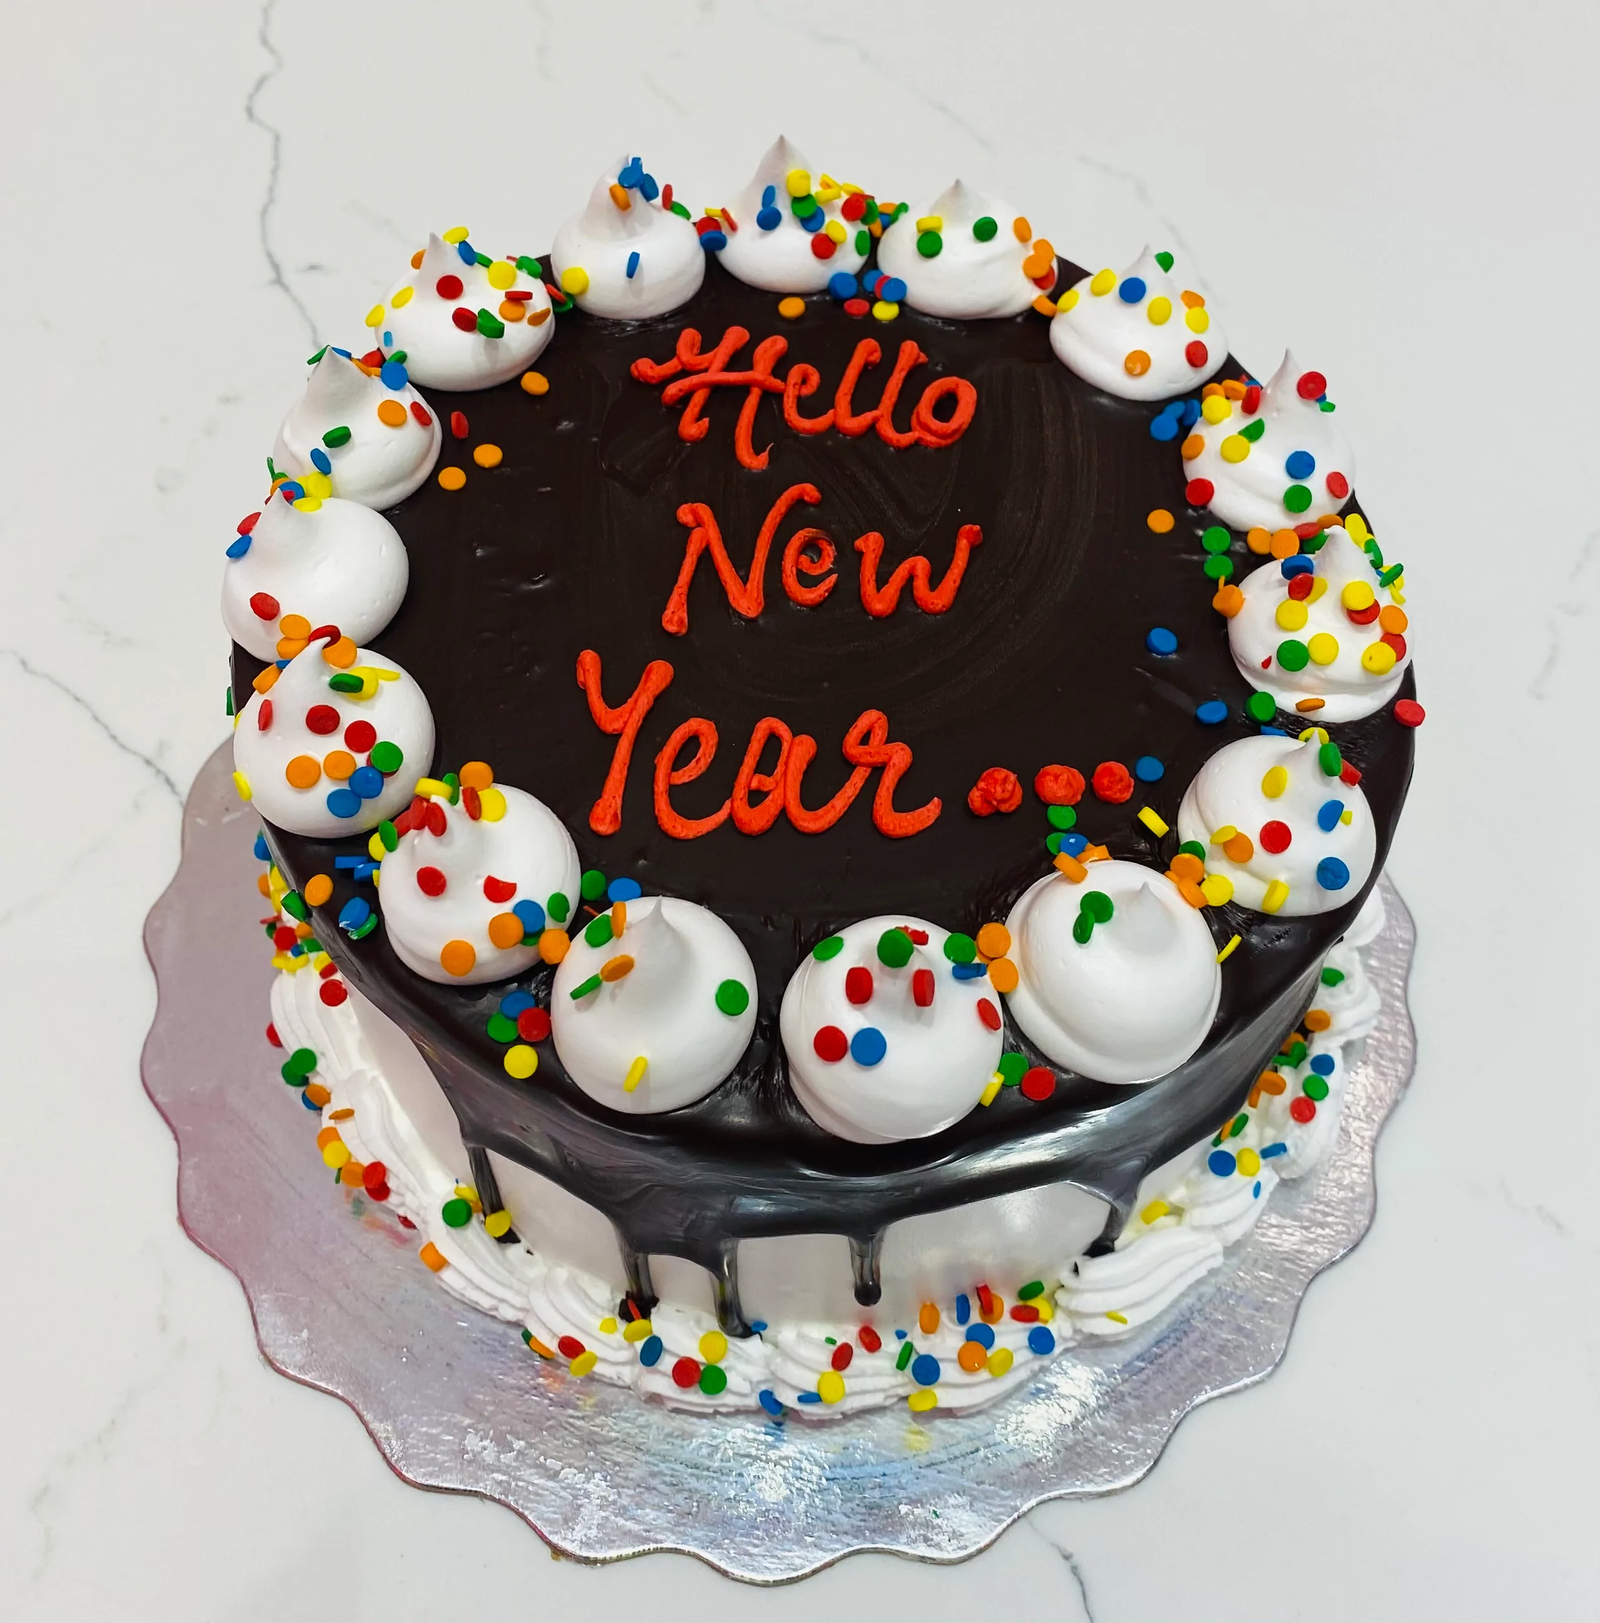 10 Best New Year Cake Design